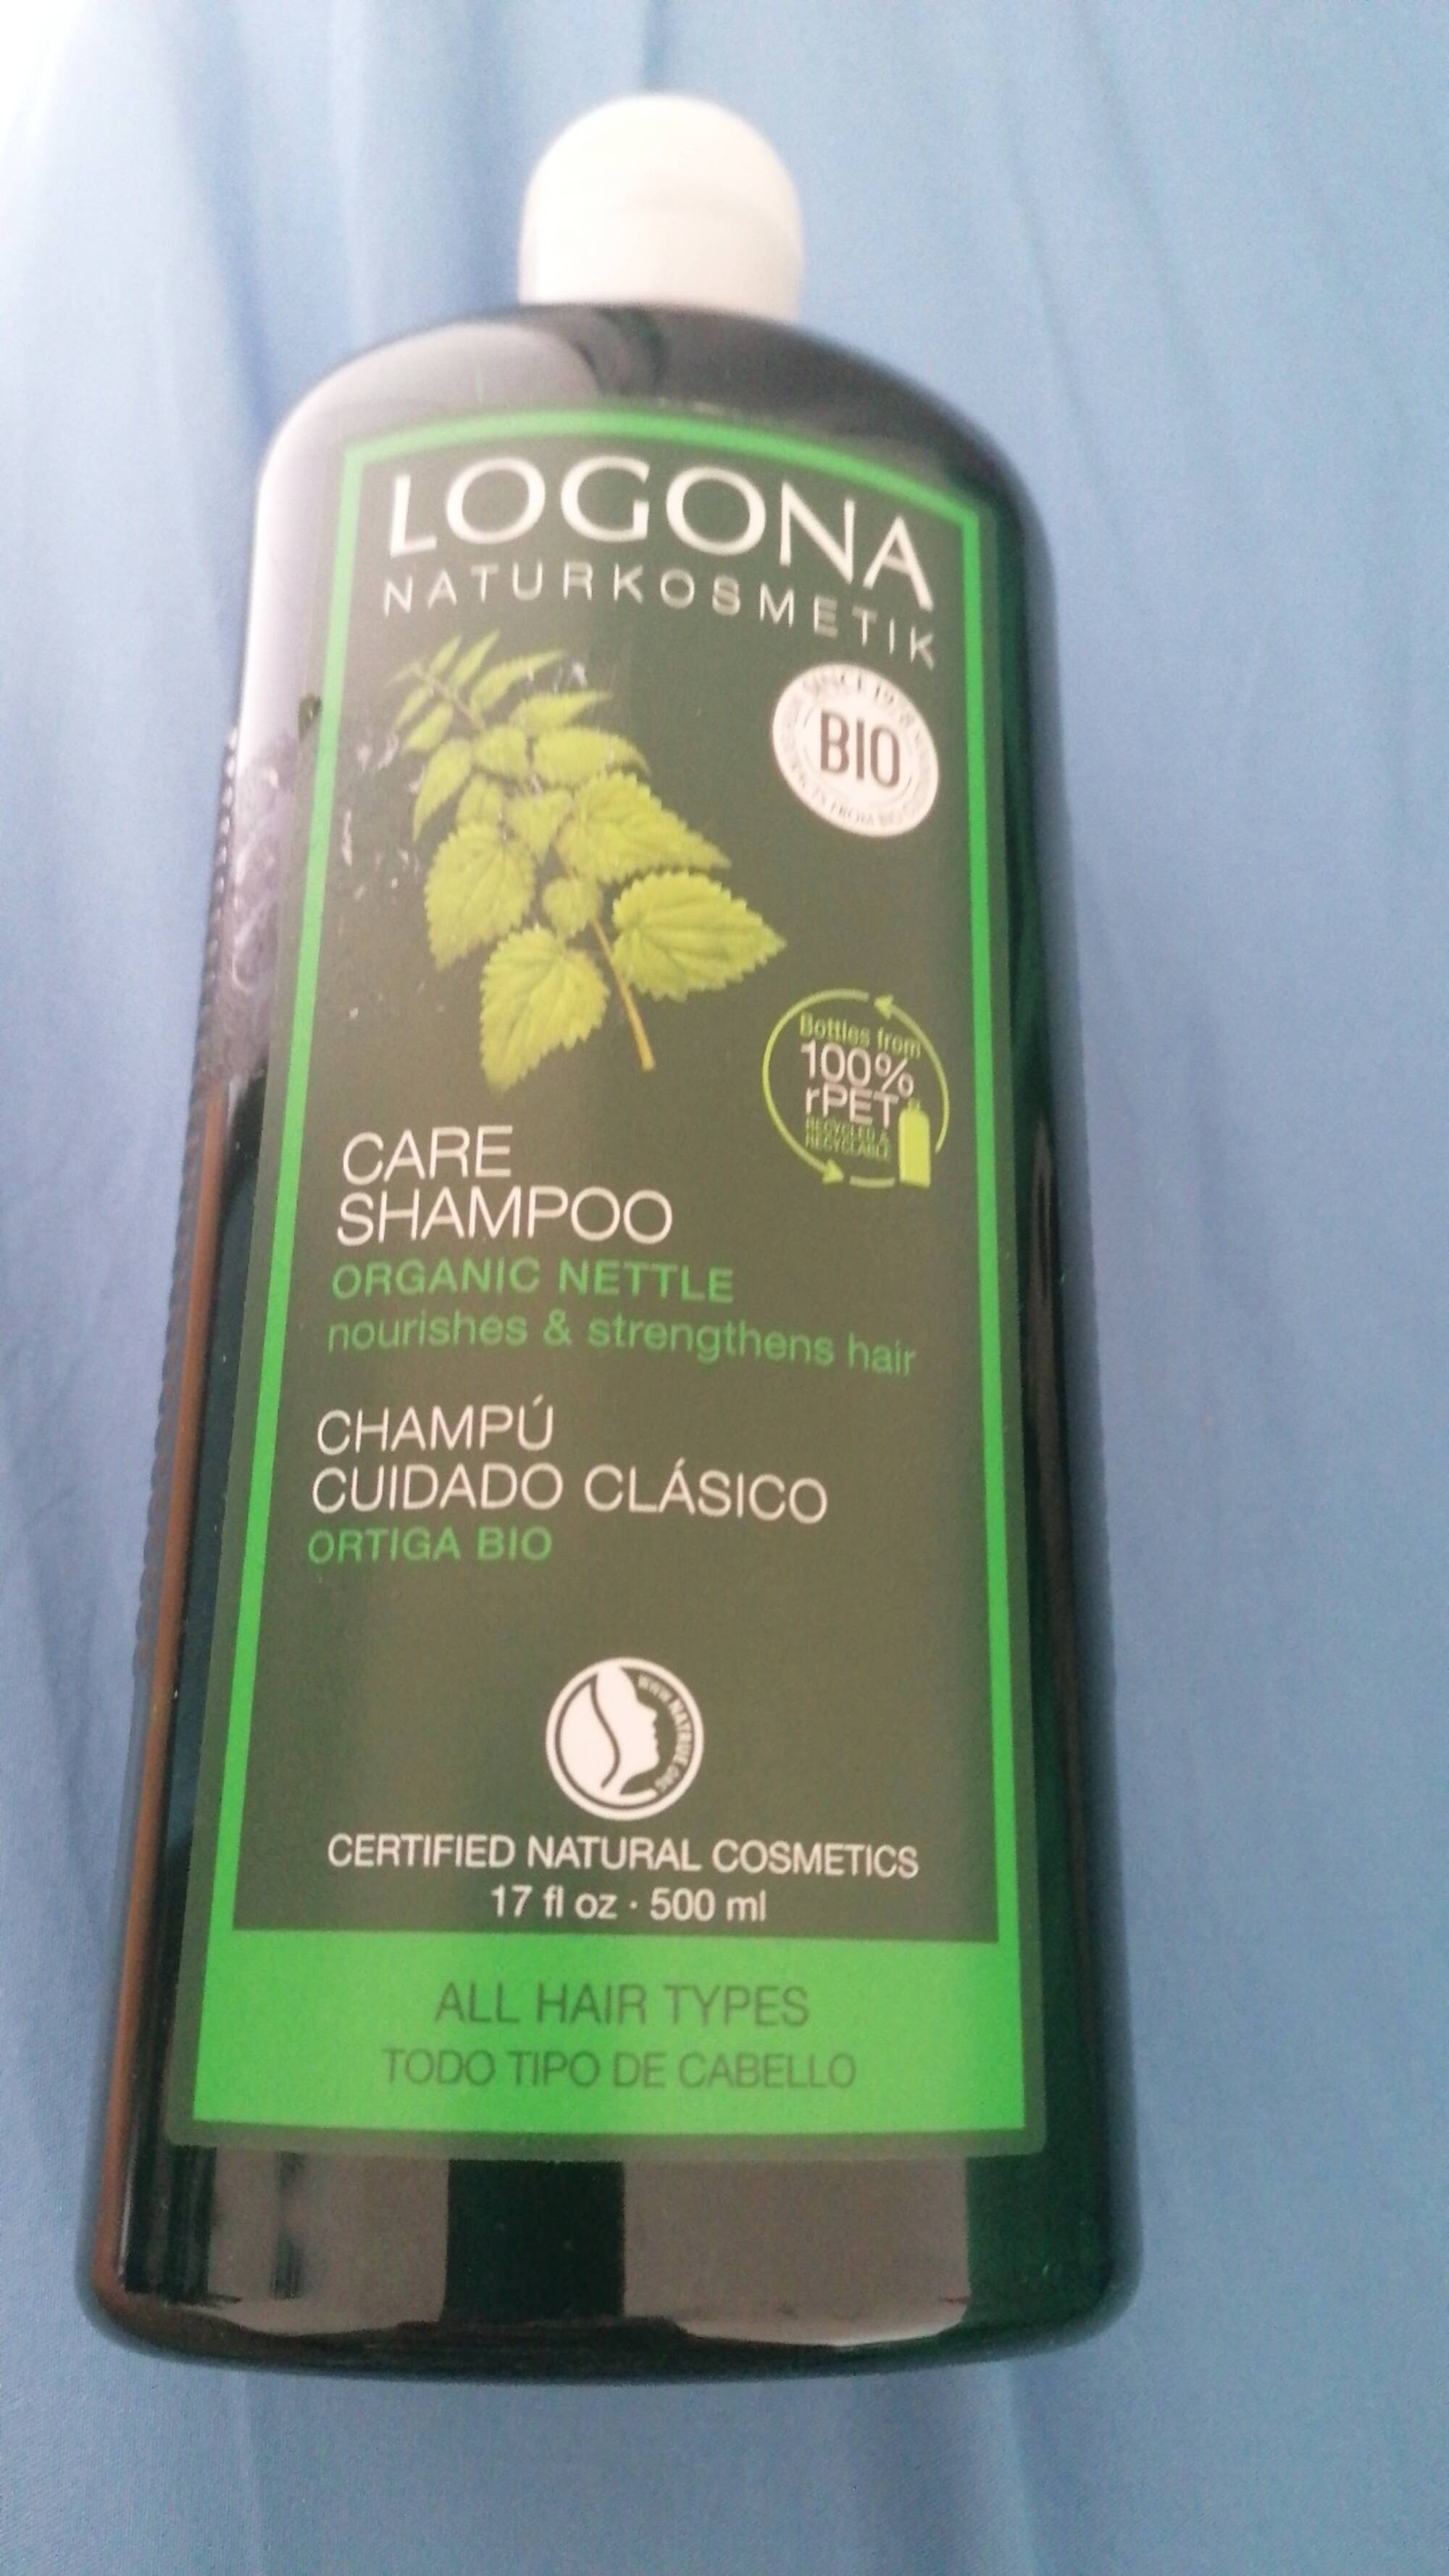 LOGONA - care shampoo- nourishes